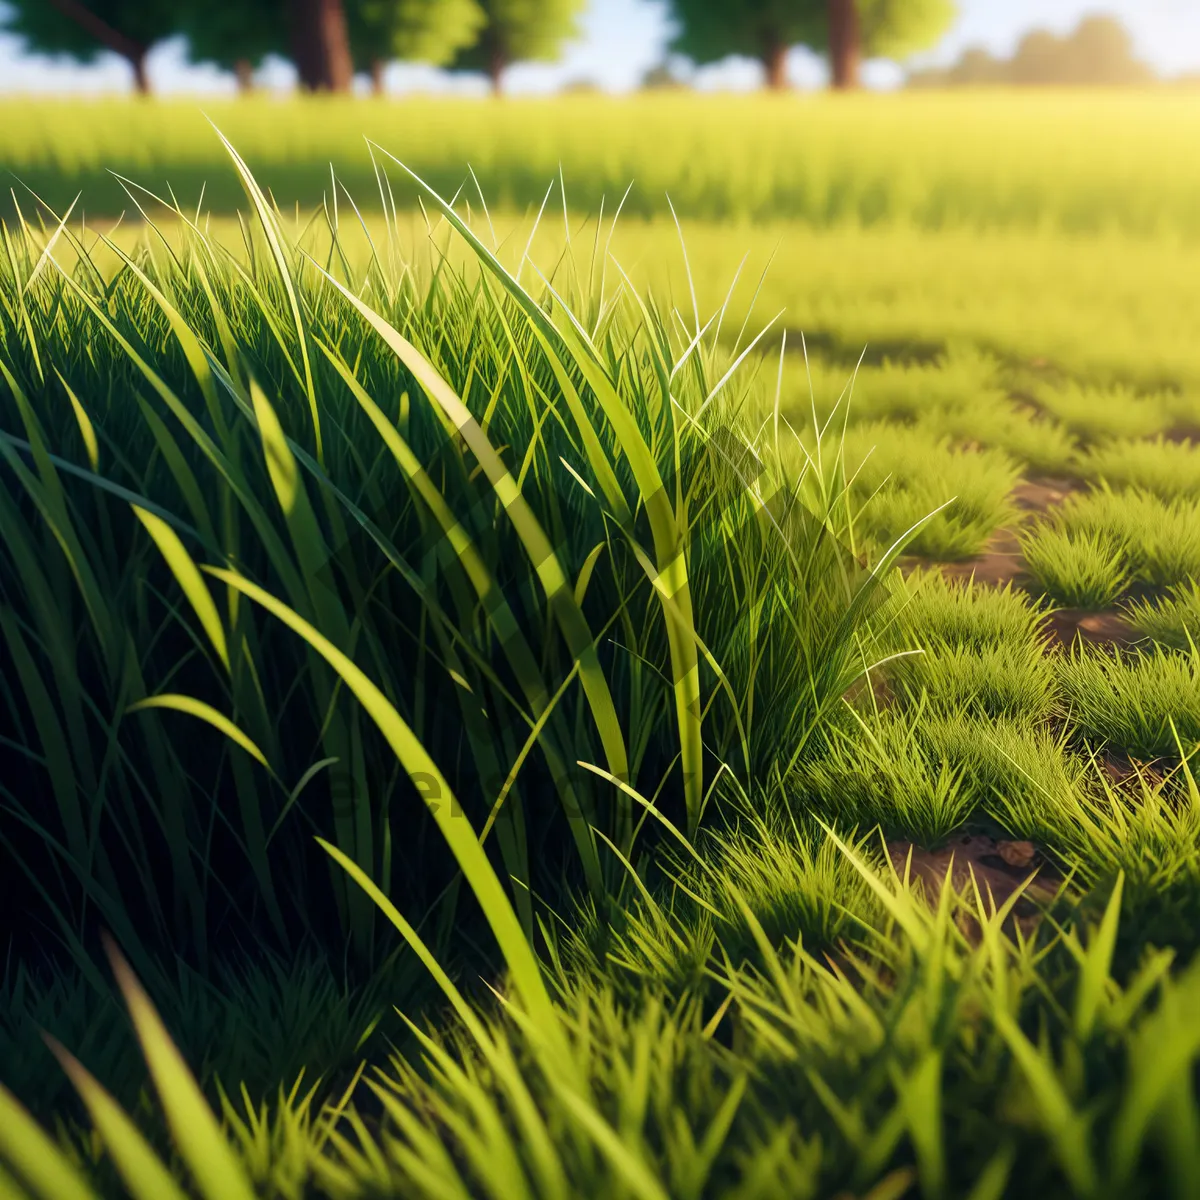 Picture of Bountiful Wheat Field under Summer Sun